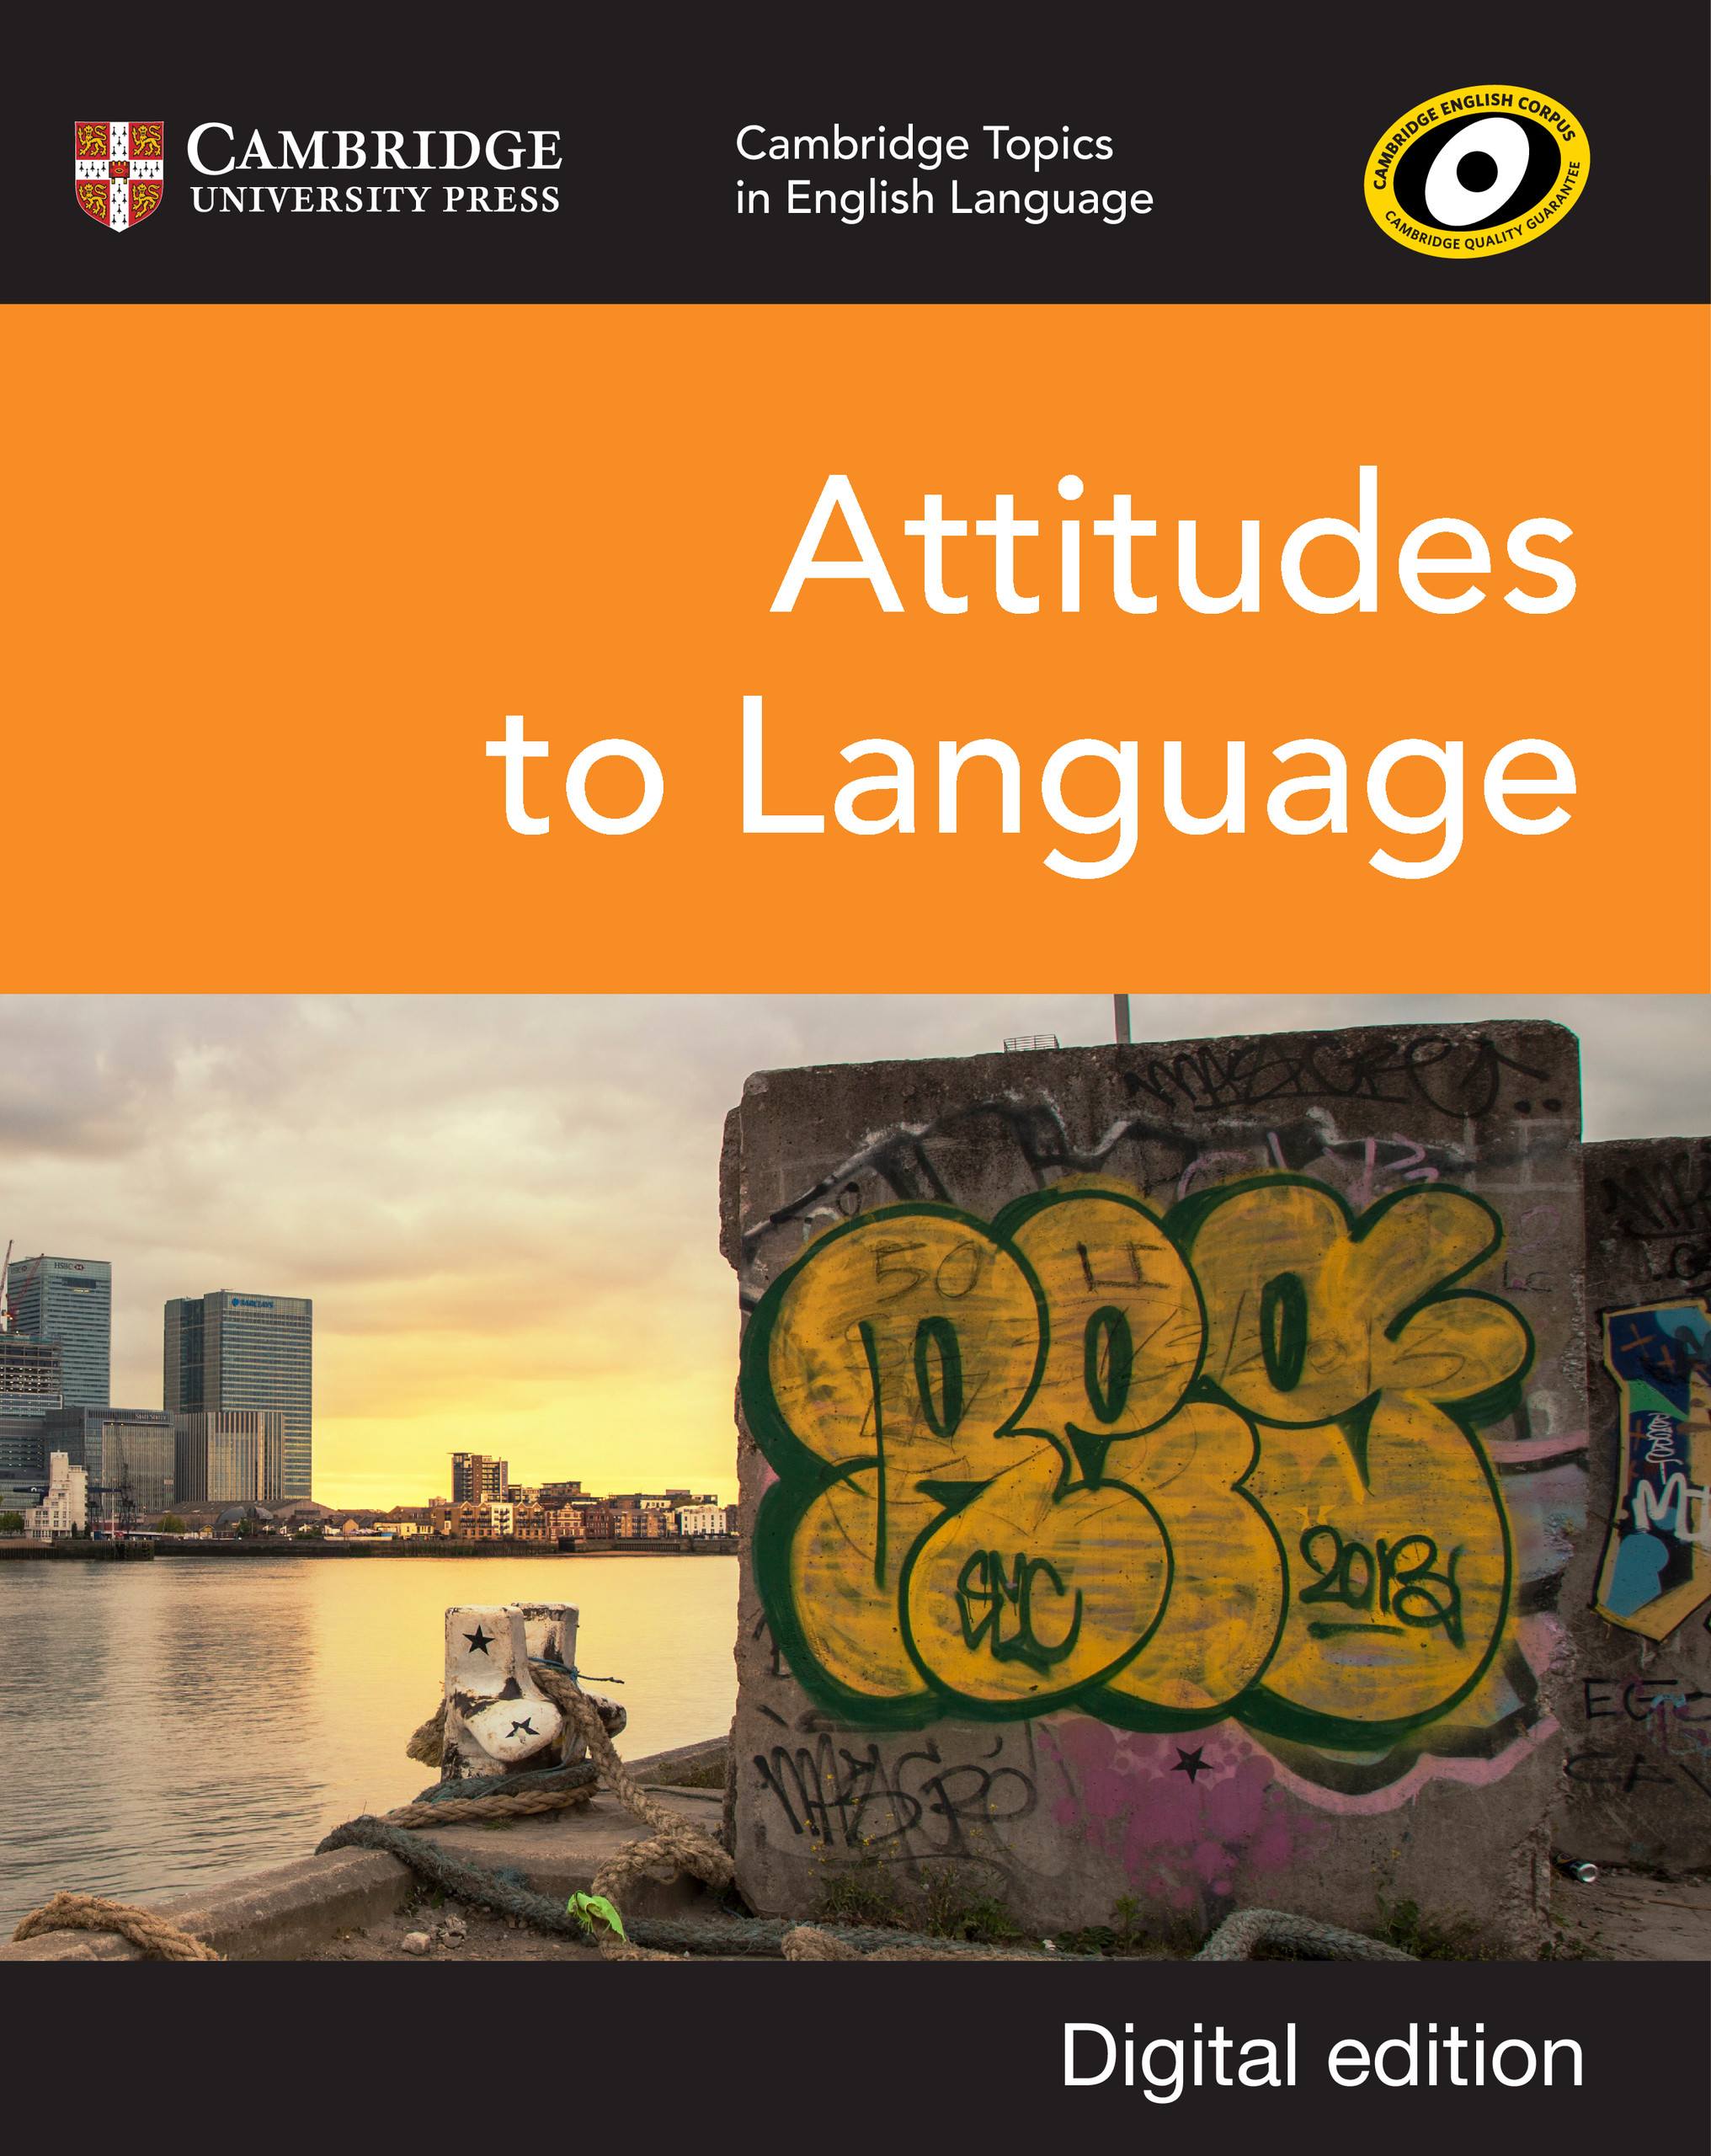 Cambridge Topics in English Language: Attitudes to Language